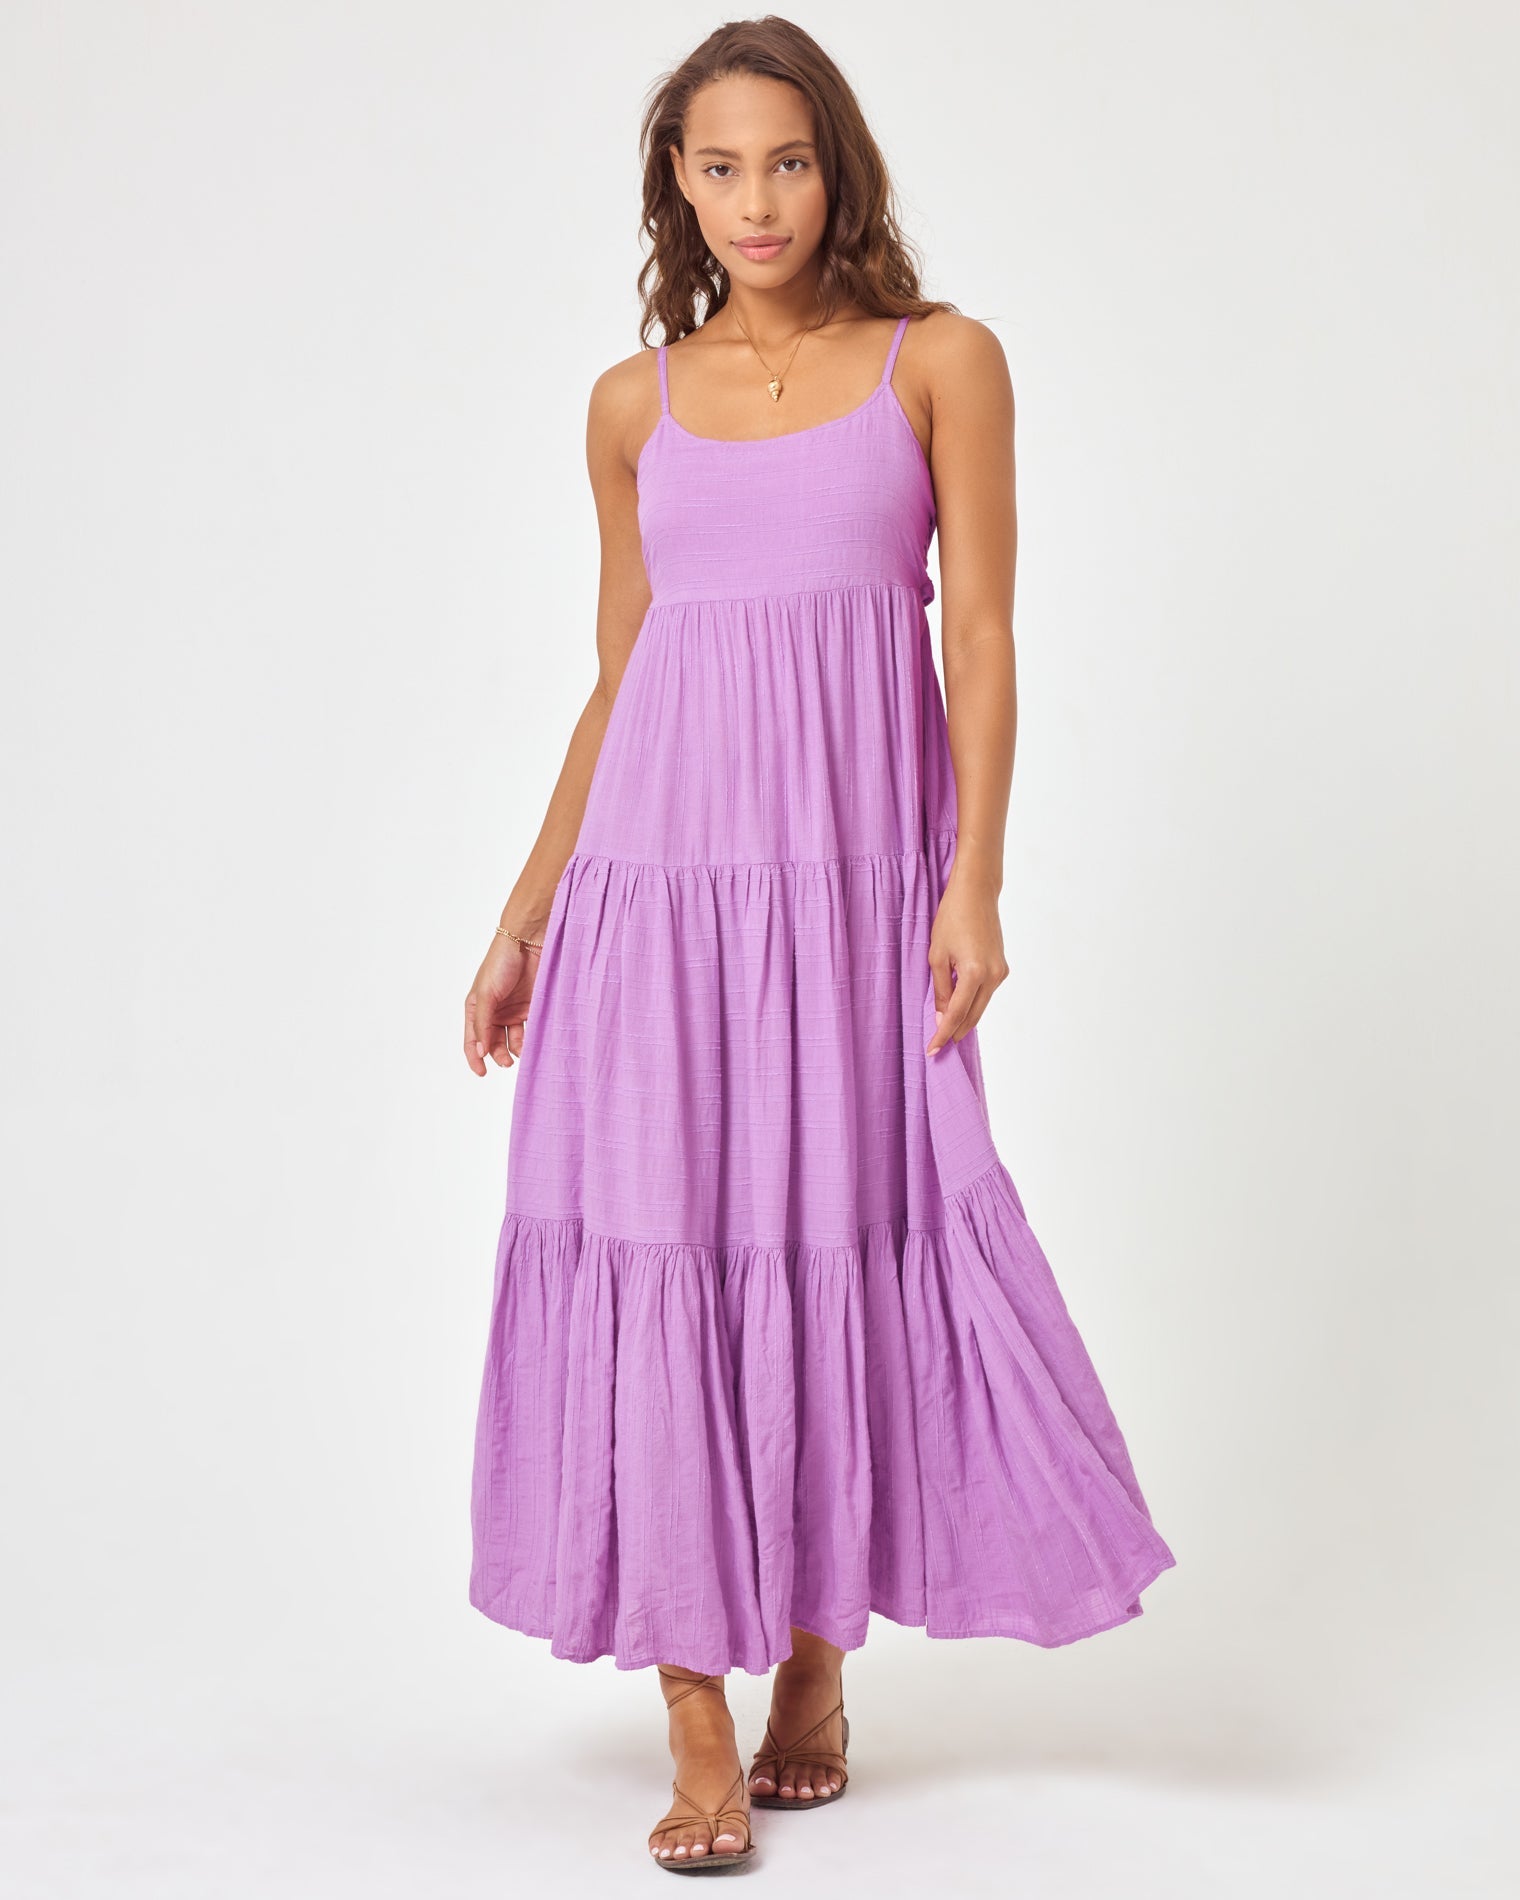 Santorini Dress Jewel | Model: Natalie (size: S)